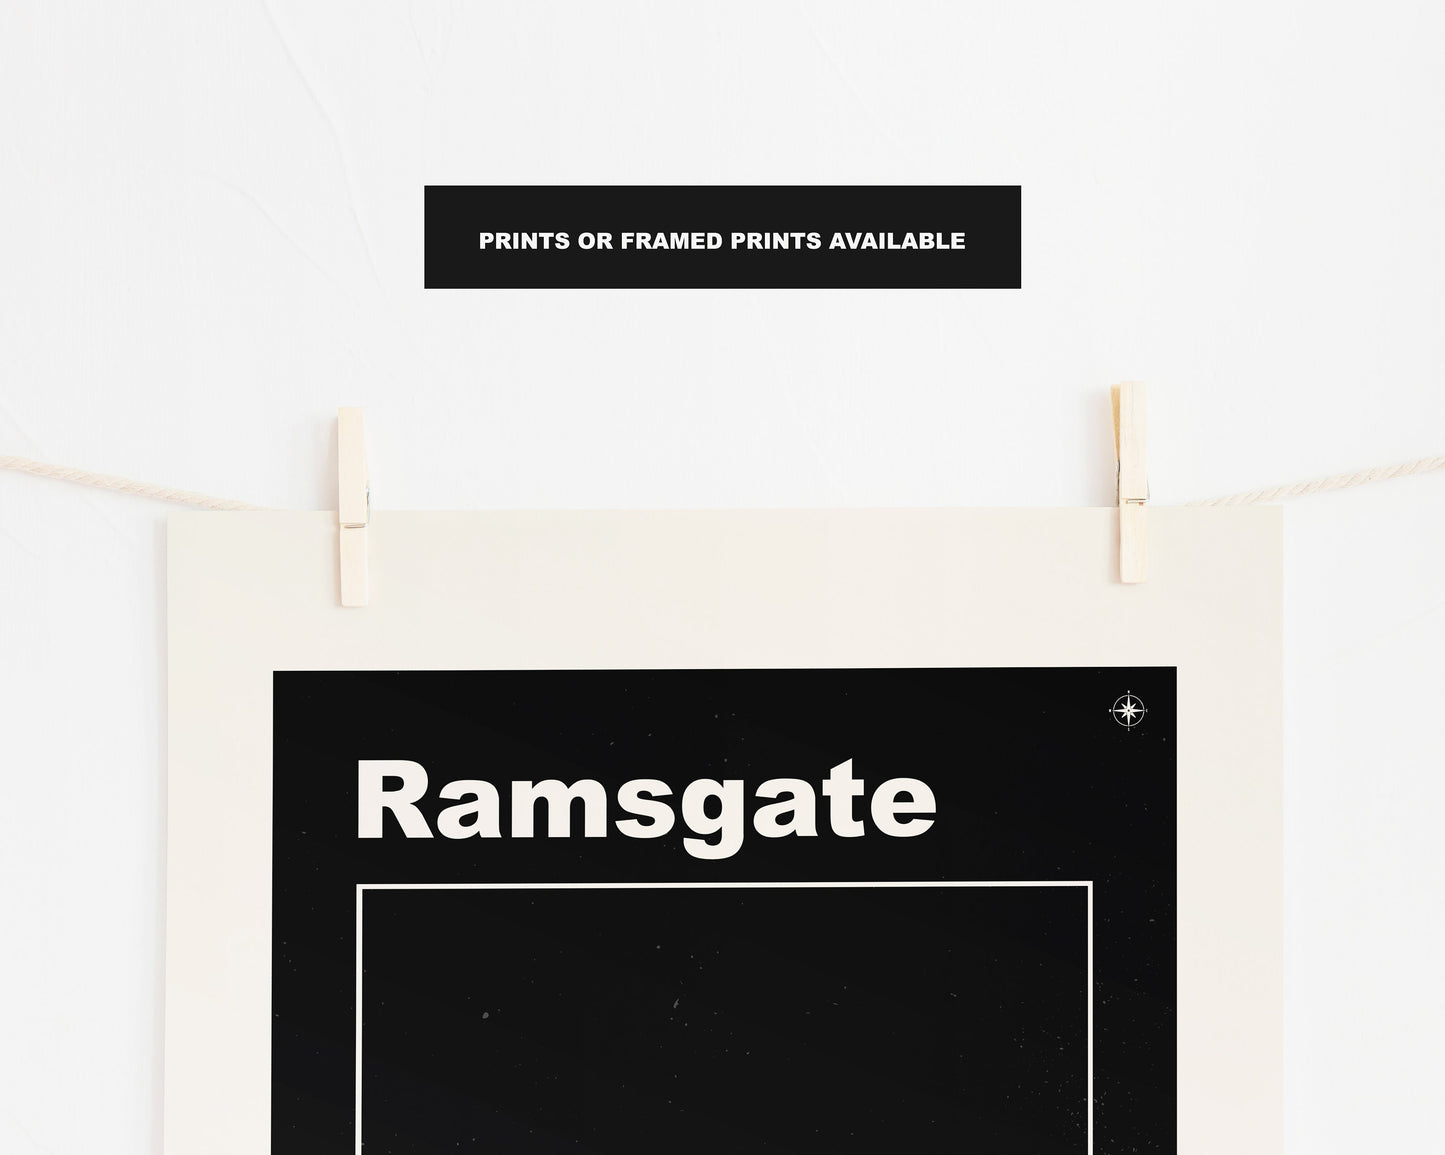 Ramsgate Print - Map Print - Mid Century Modern  - Retro - Vintage - Contemporary - Ramsgate Print - Map - Map Poster - Gift - Kent